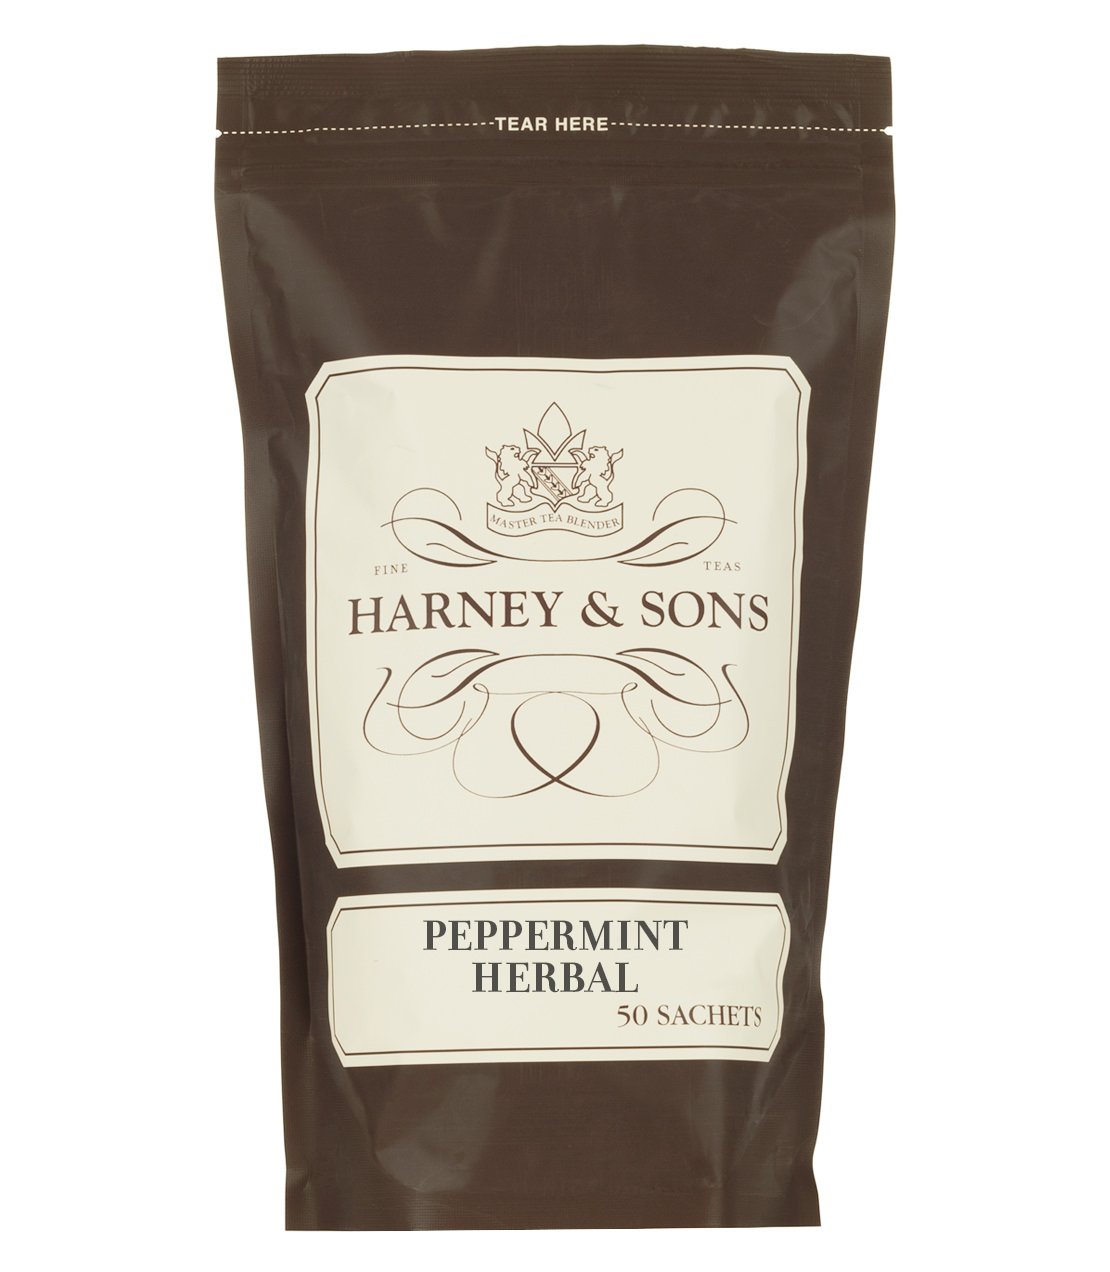 Peppermint Herbal - Harney & Sons Teas, European Distribution Center